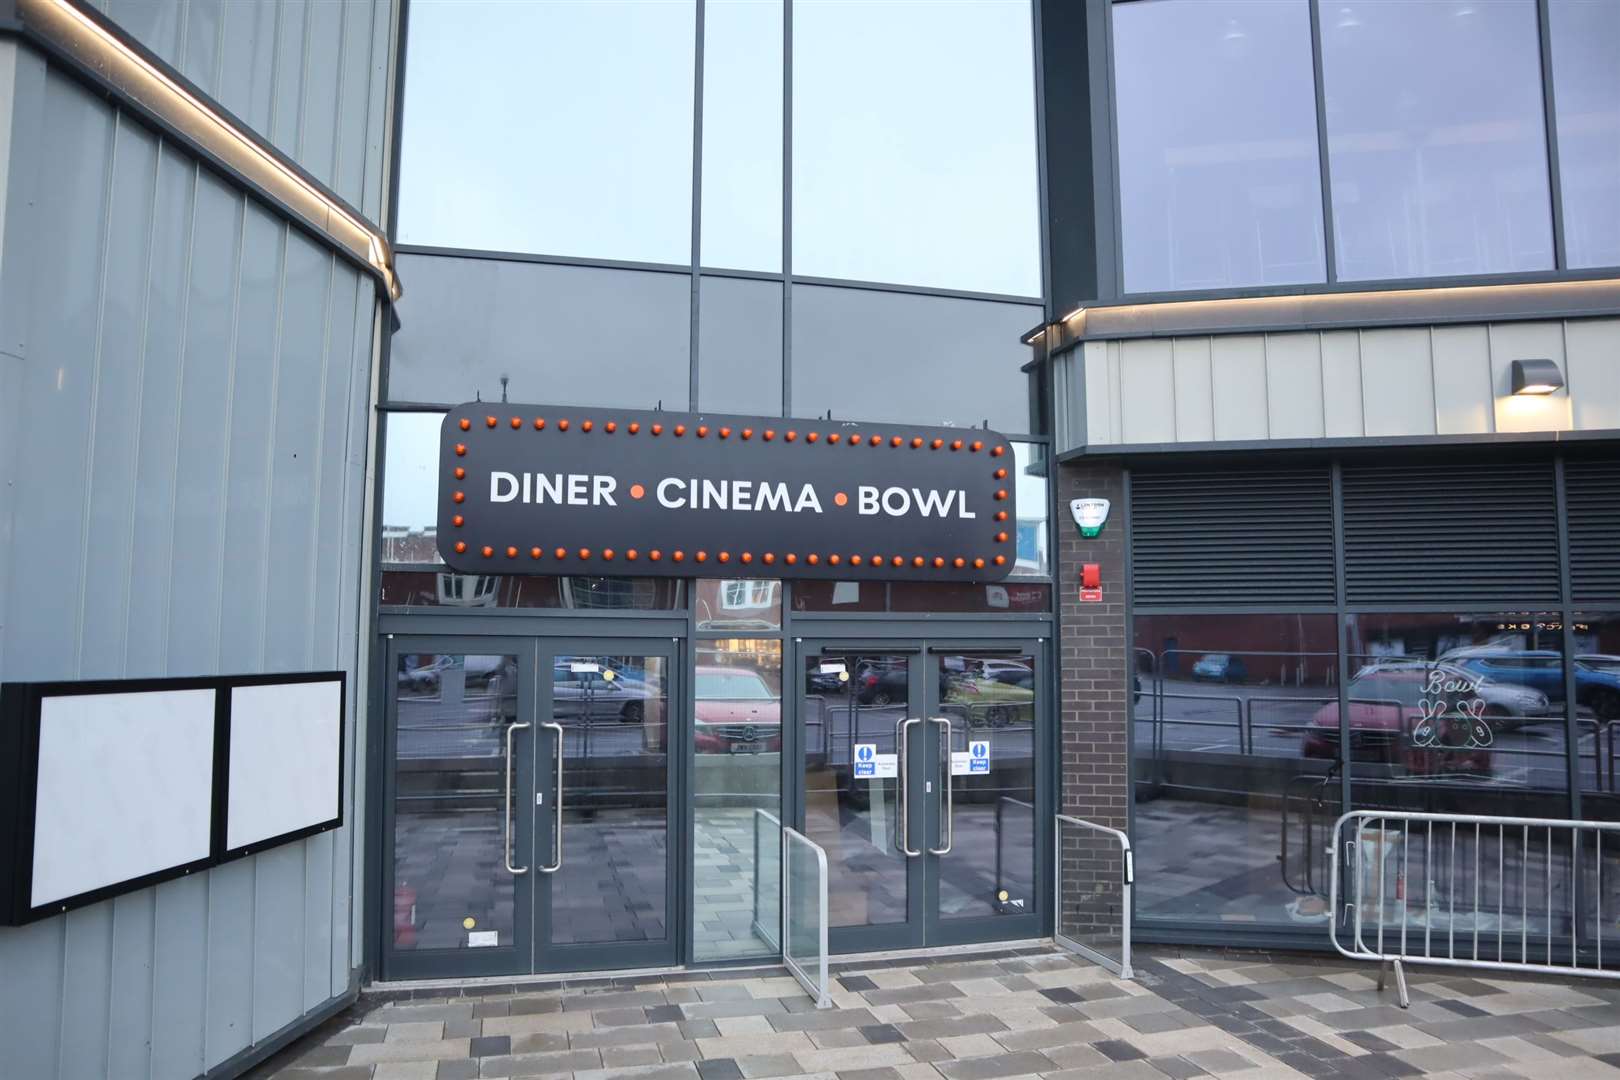 The Light multi-screen cinema in Sittingbourne